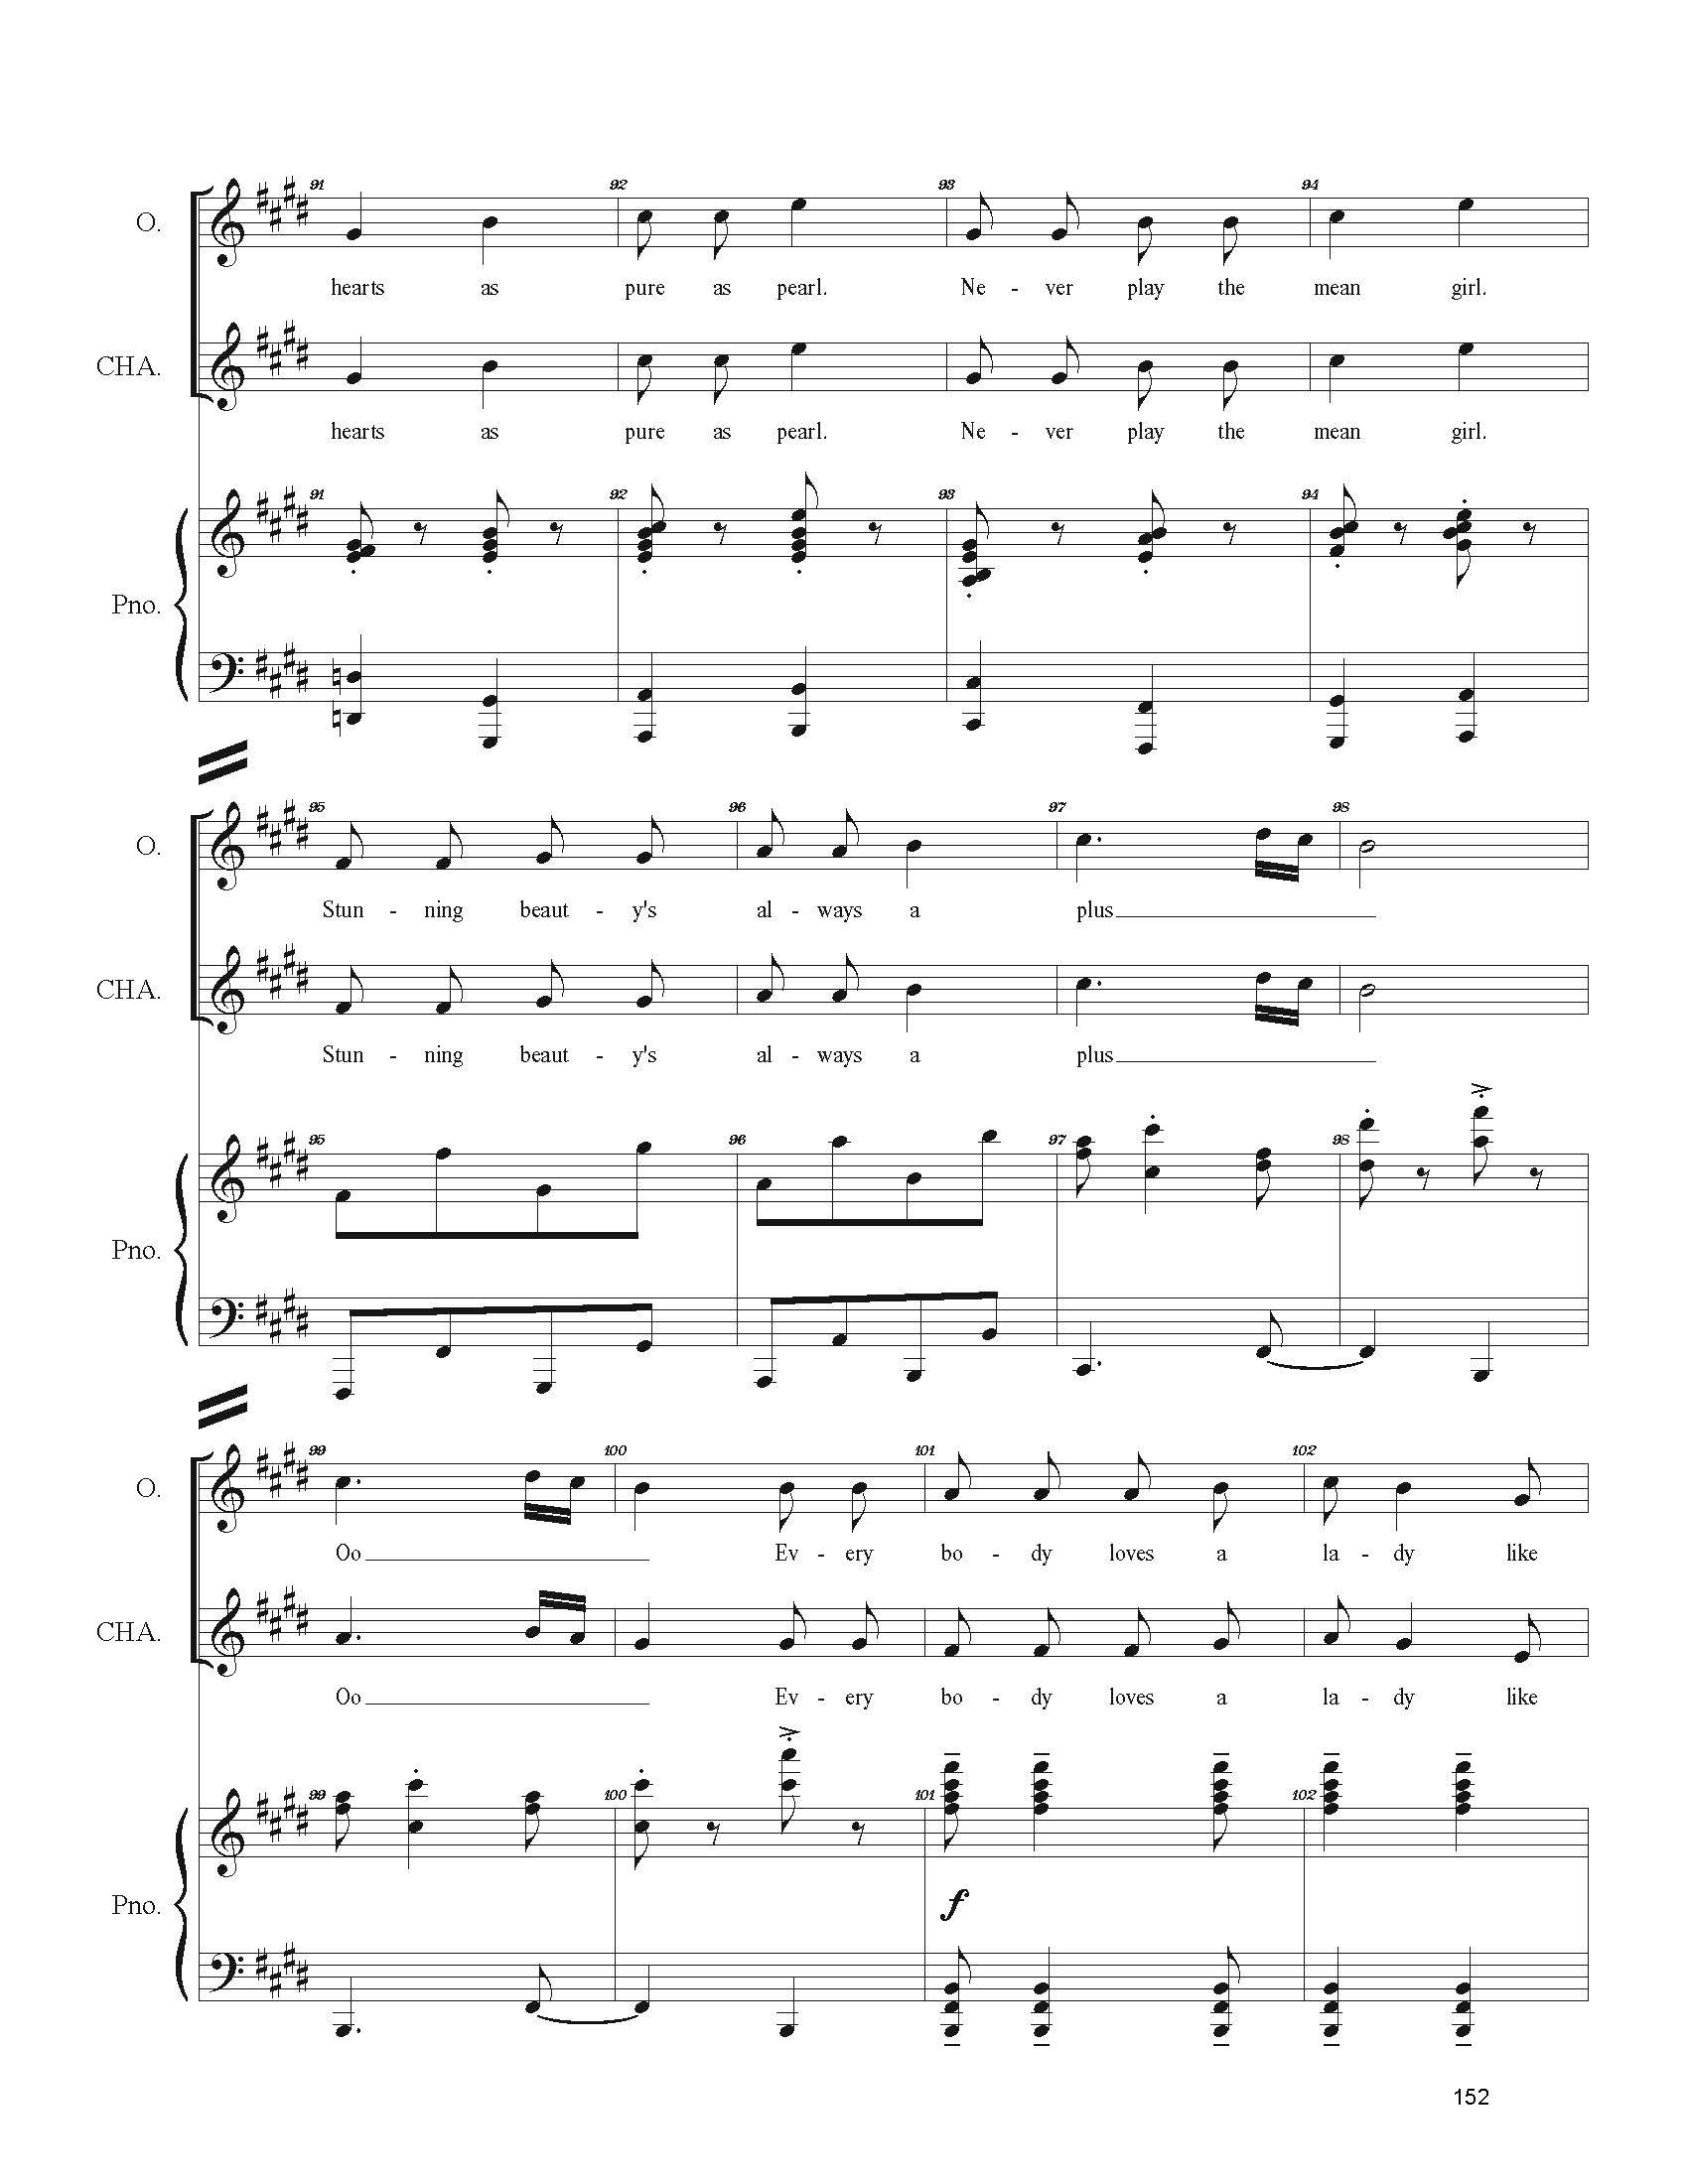 FULL PIANO VOCAL SCORE DRAFT 1 - Score_Page_152.jpg